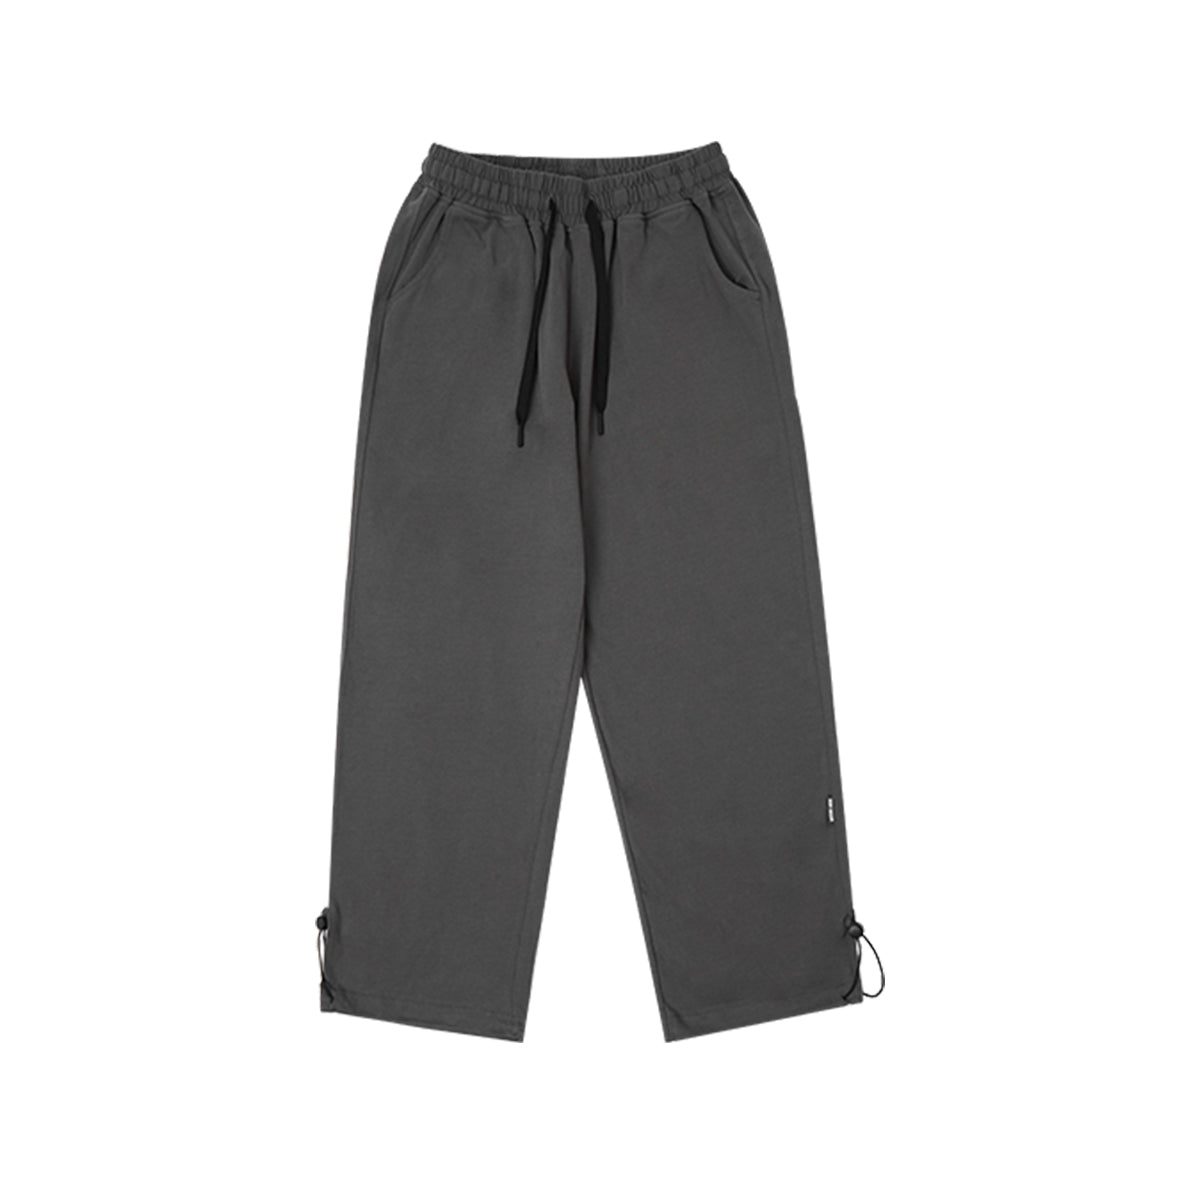 Signature Baggy Fit Natural Rise Drawstring Charcoal Sport Pants - 0cm